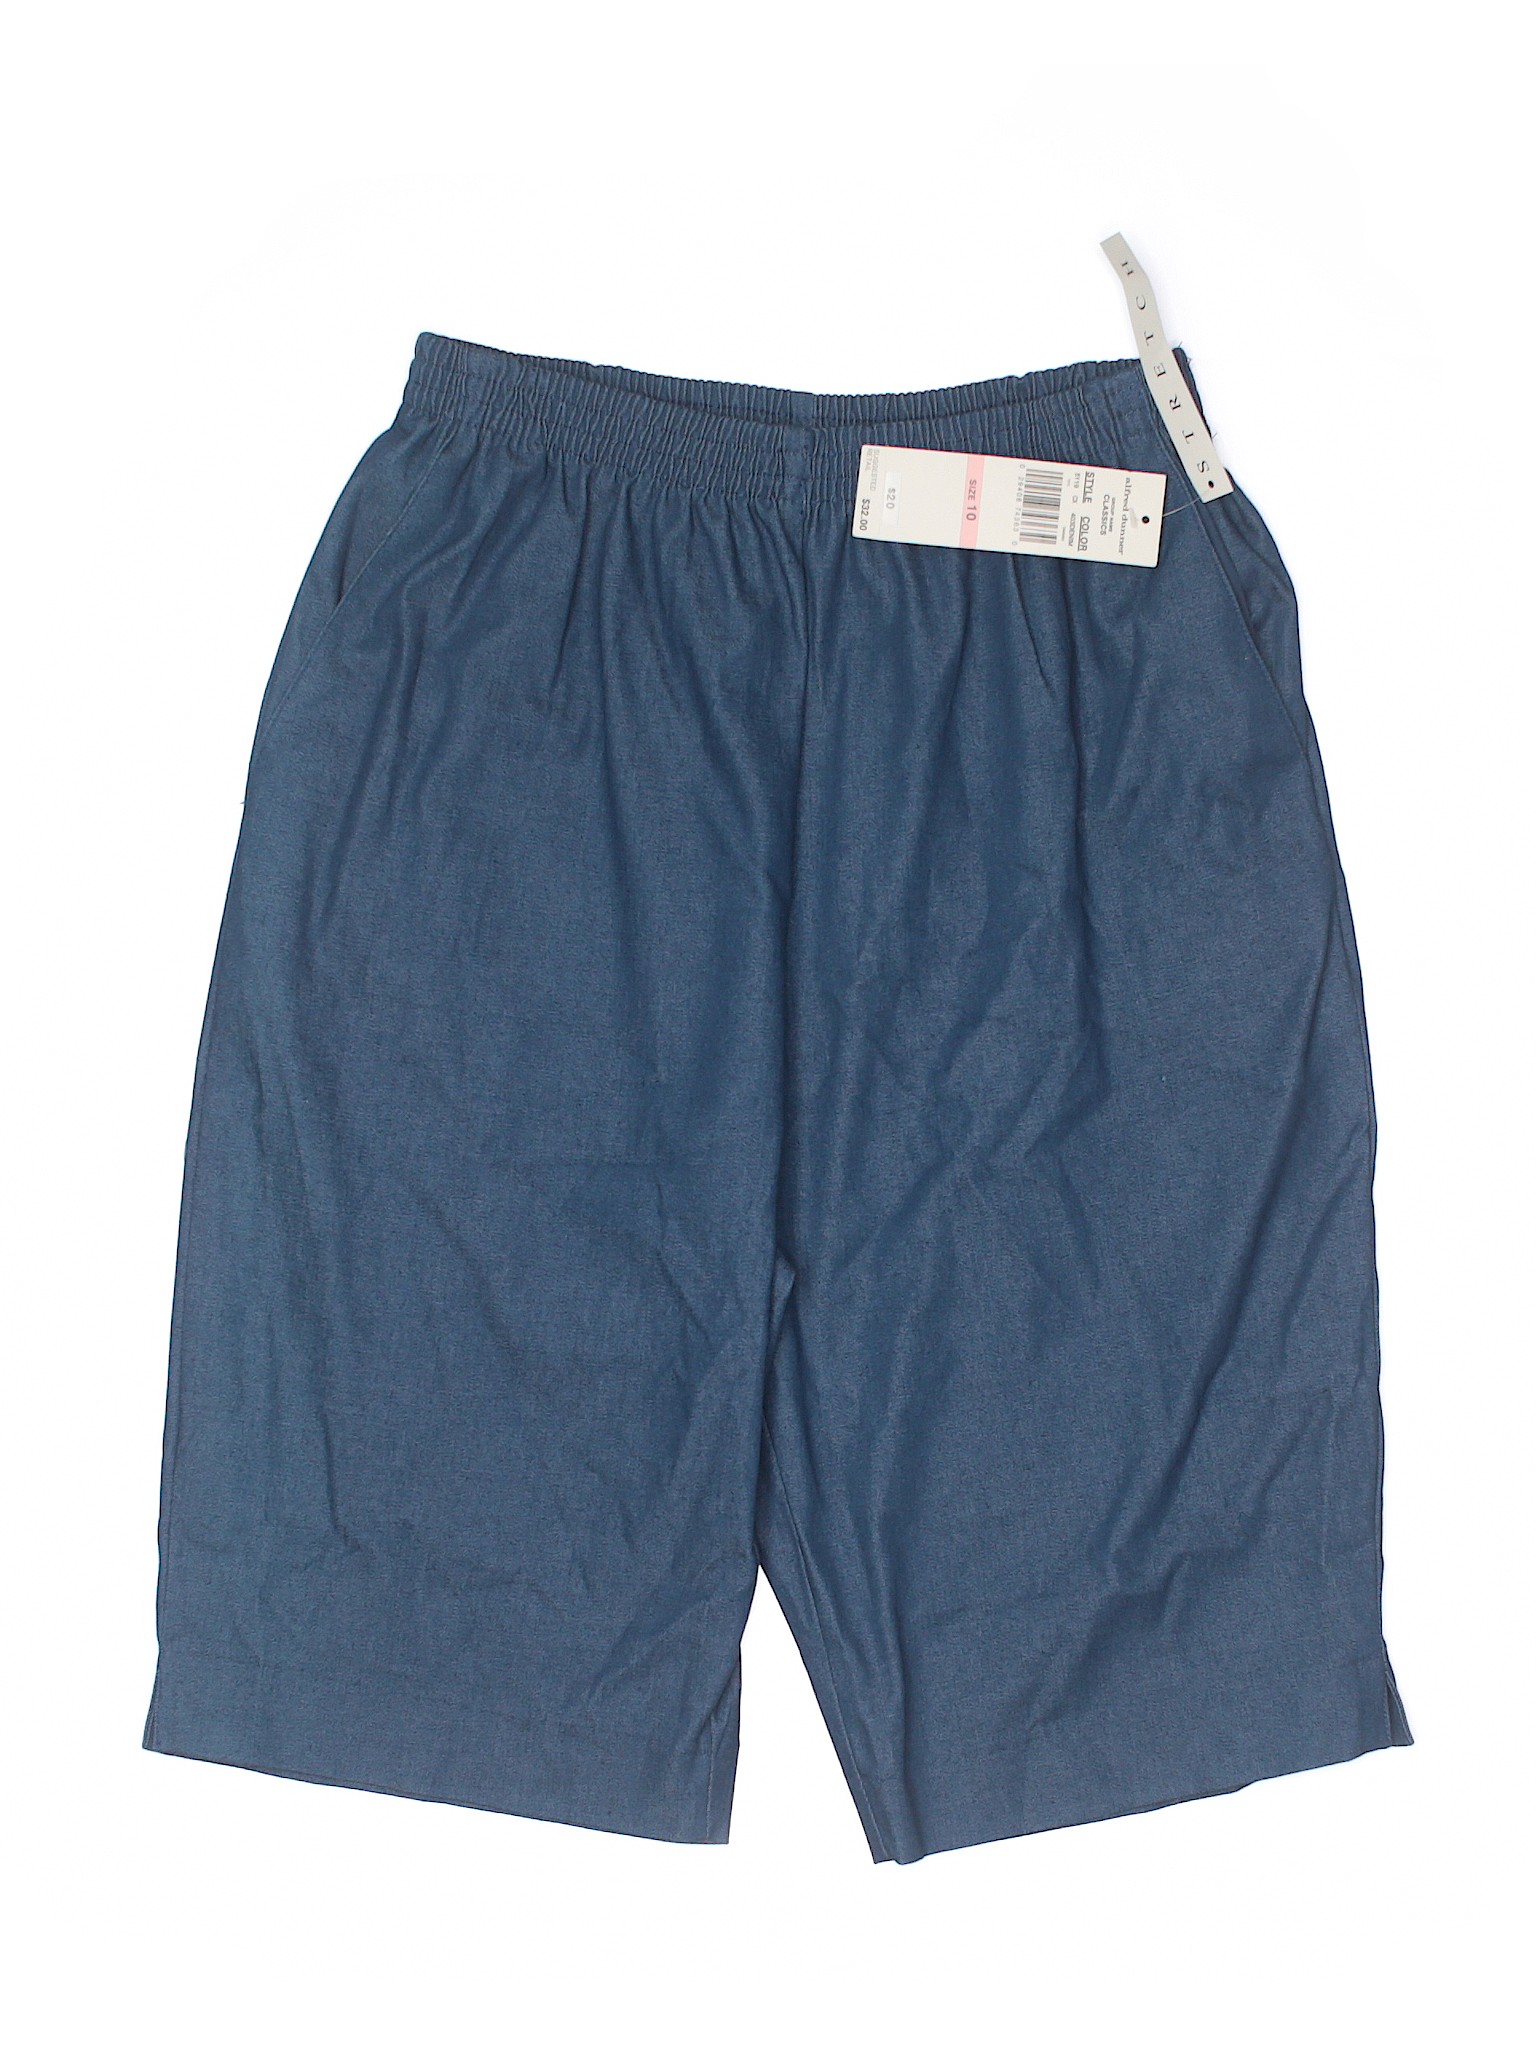 Alfred Dunner Women Blue Shorts 10 | eBay